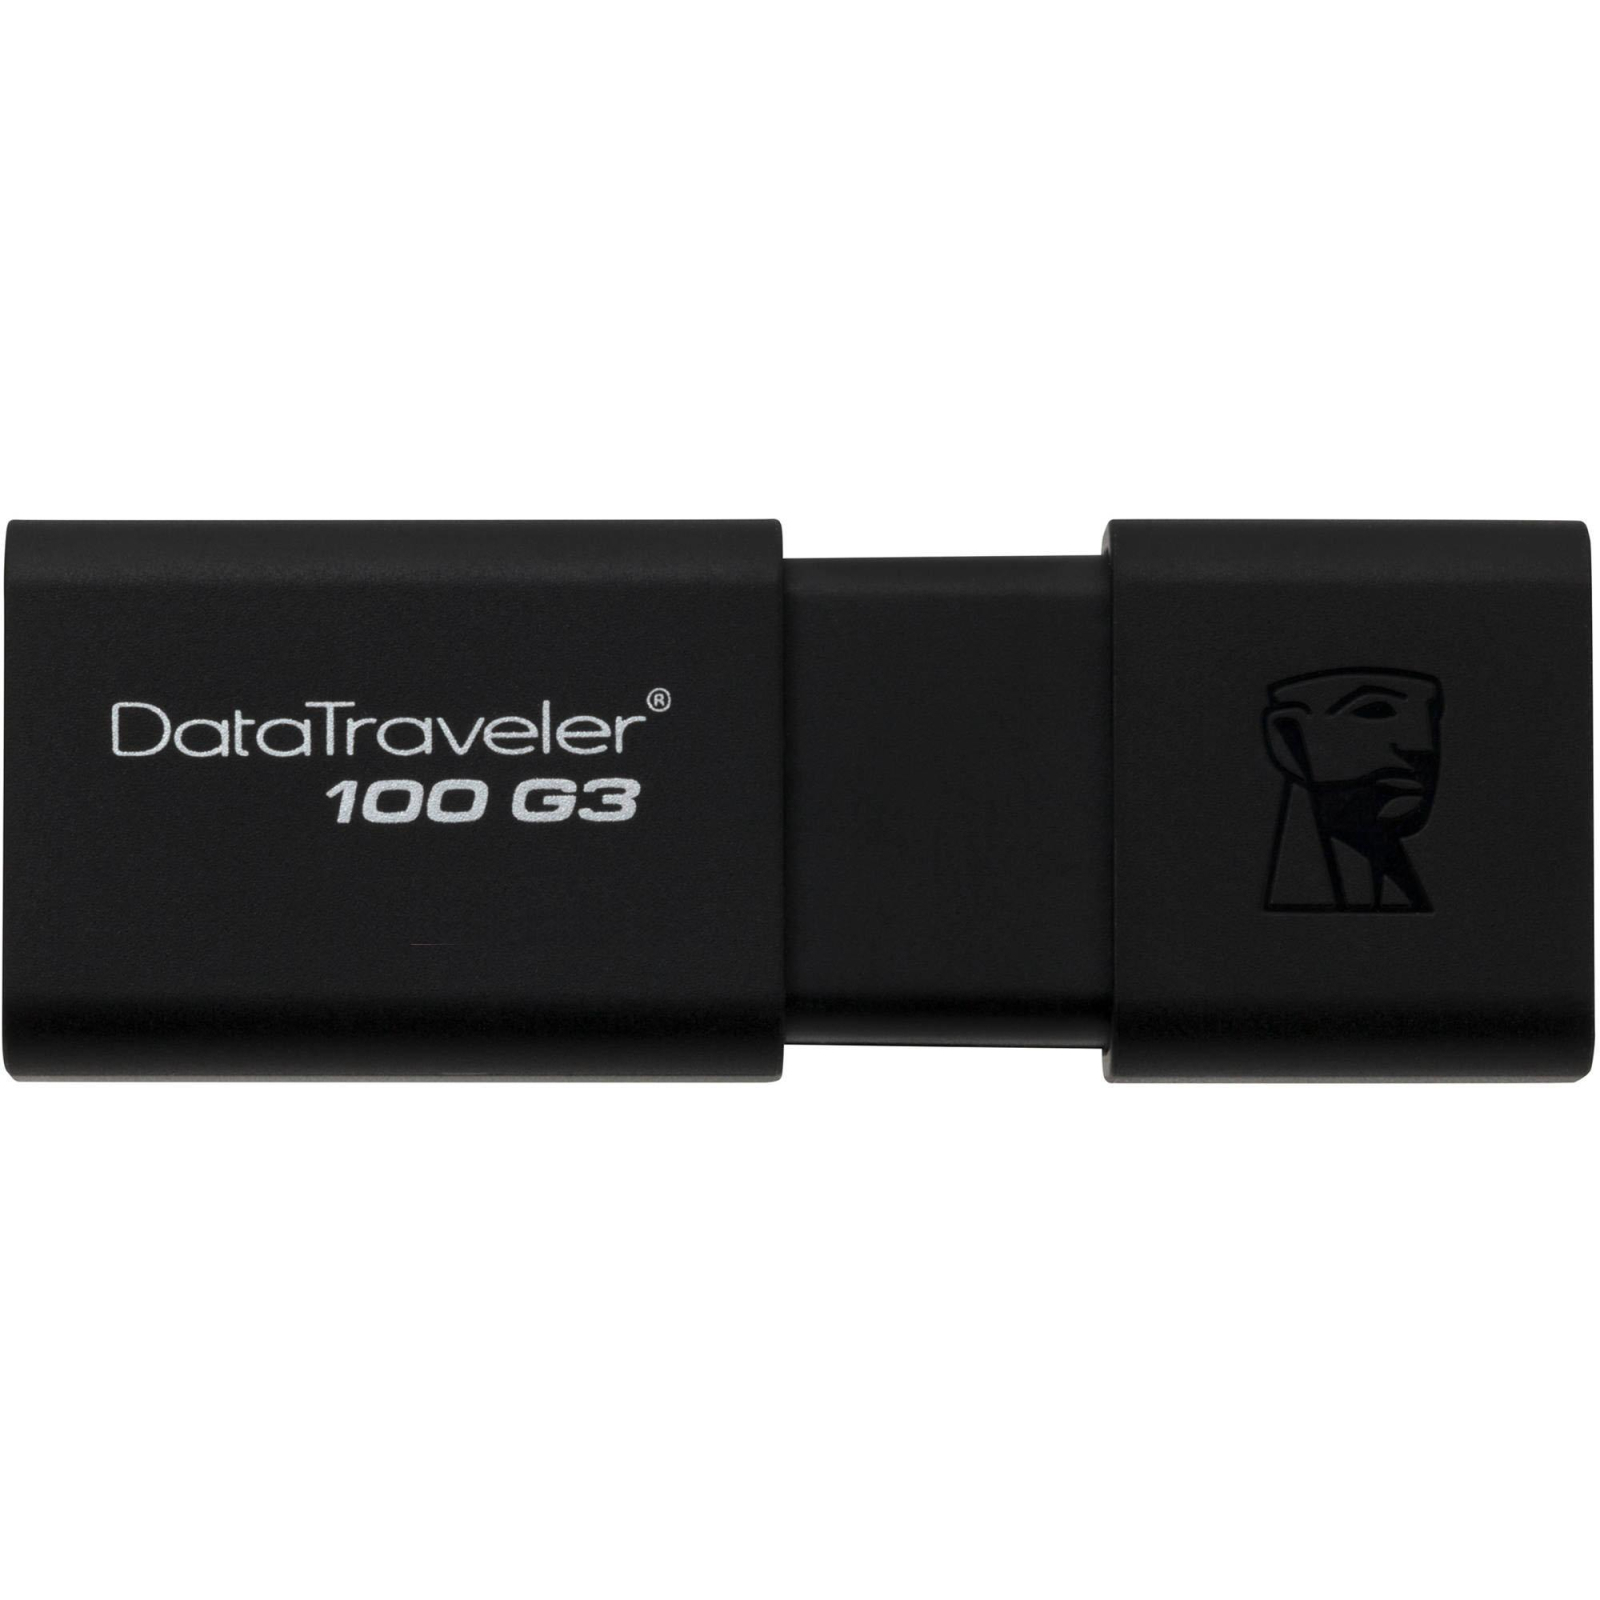 USB флеш накопитель Kingston 256GB DT 100 G3 Black USB 3.0 (DT100G3/256GB)